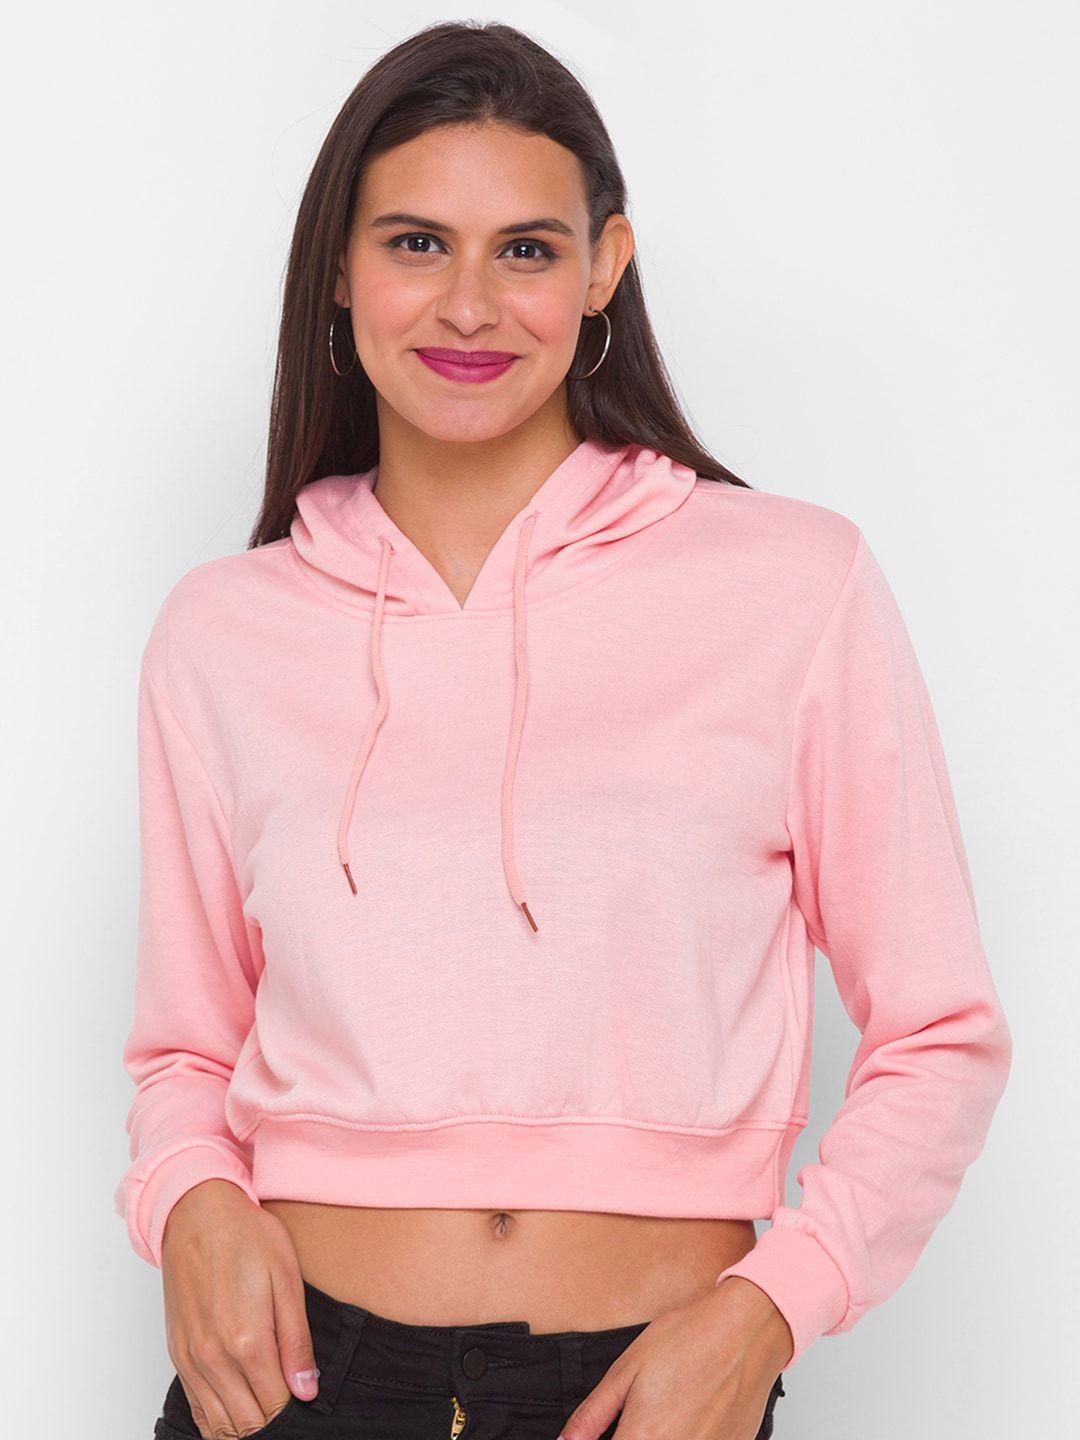 globus woman pink hooded sweatshirt